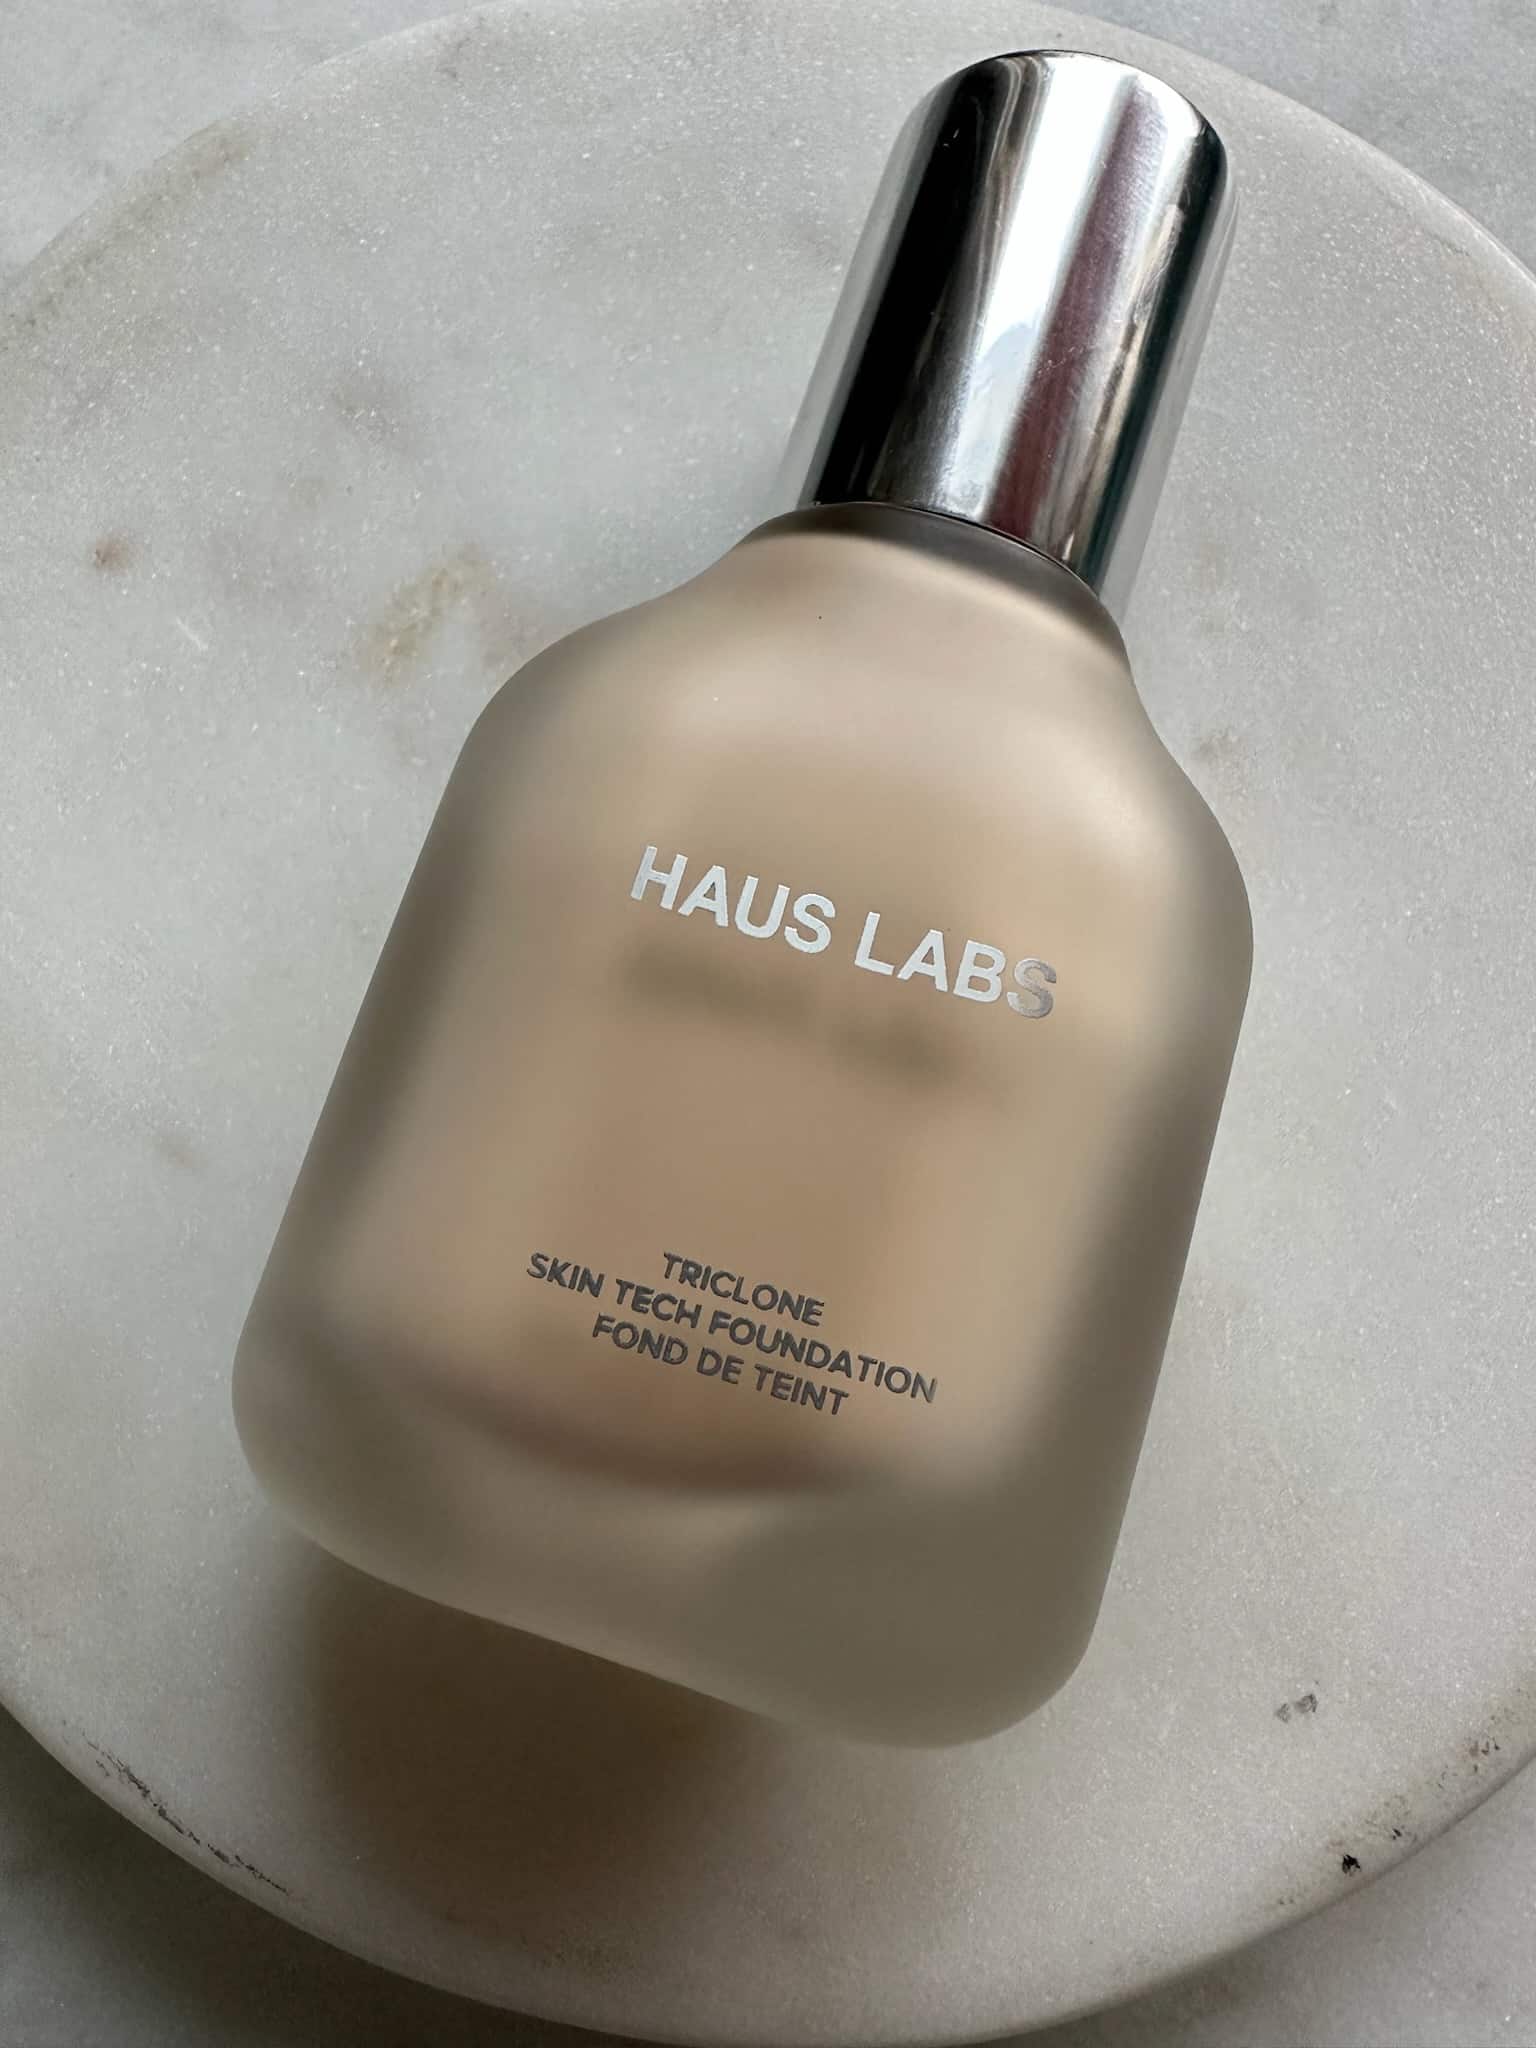 Haus Labs by Lady Gaga Cruelty-Free Foundation Brush